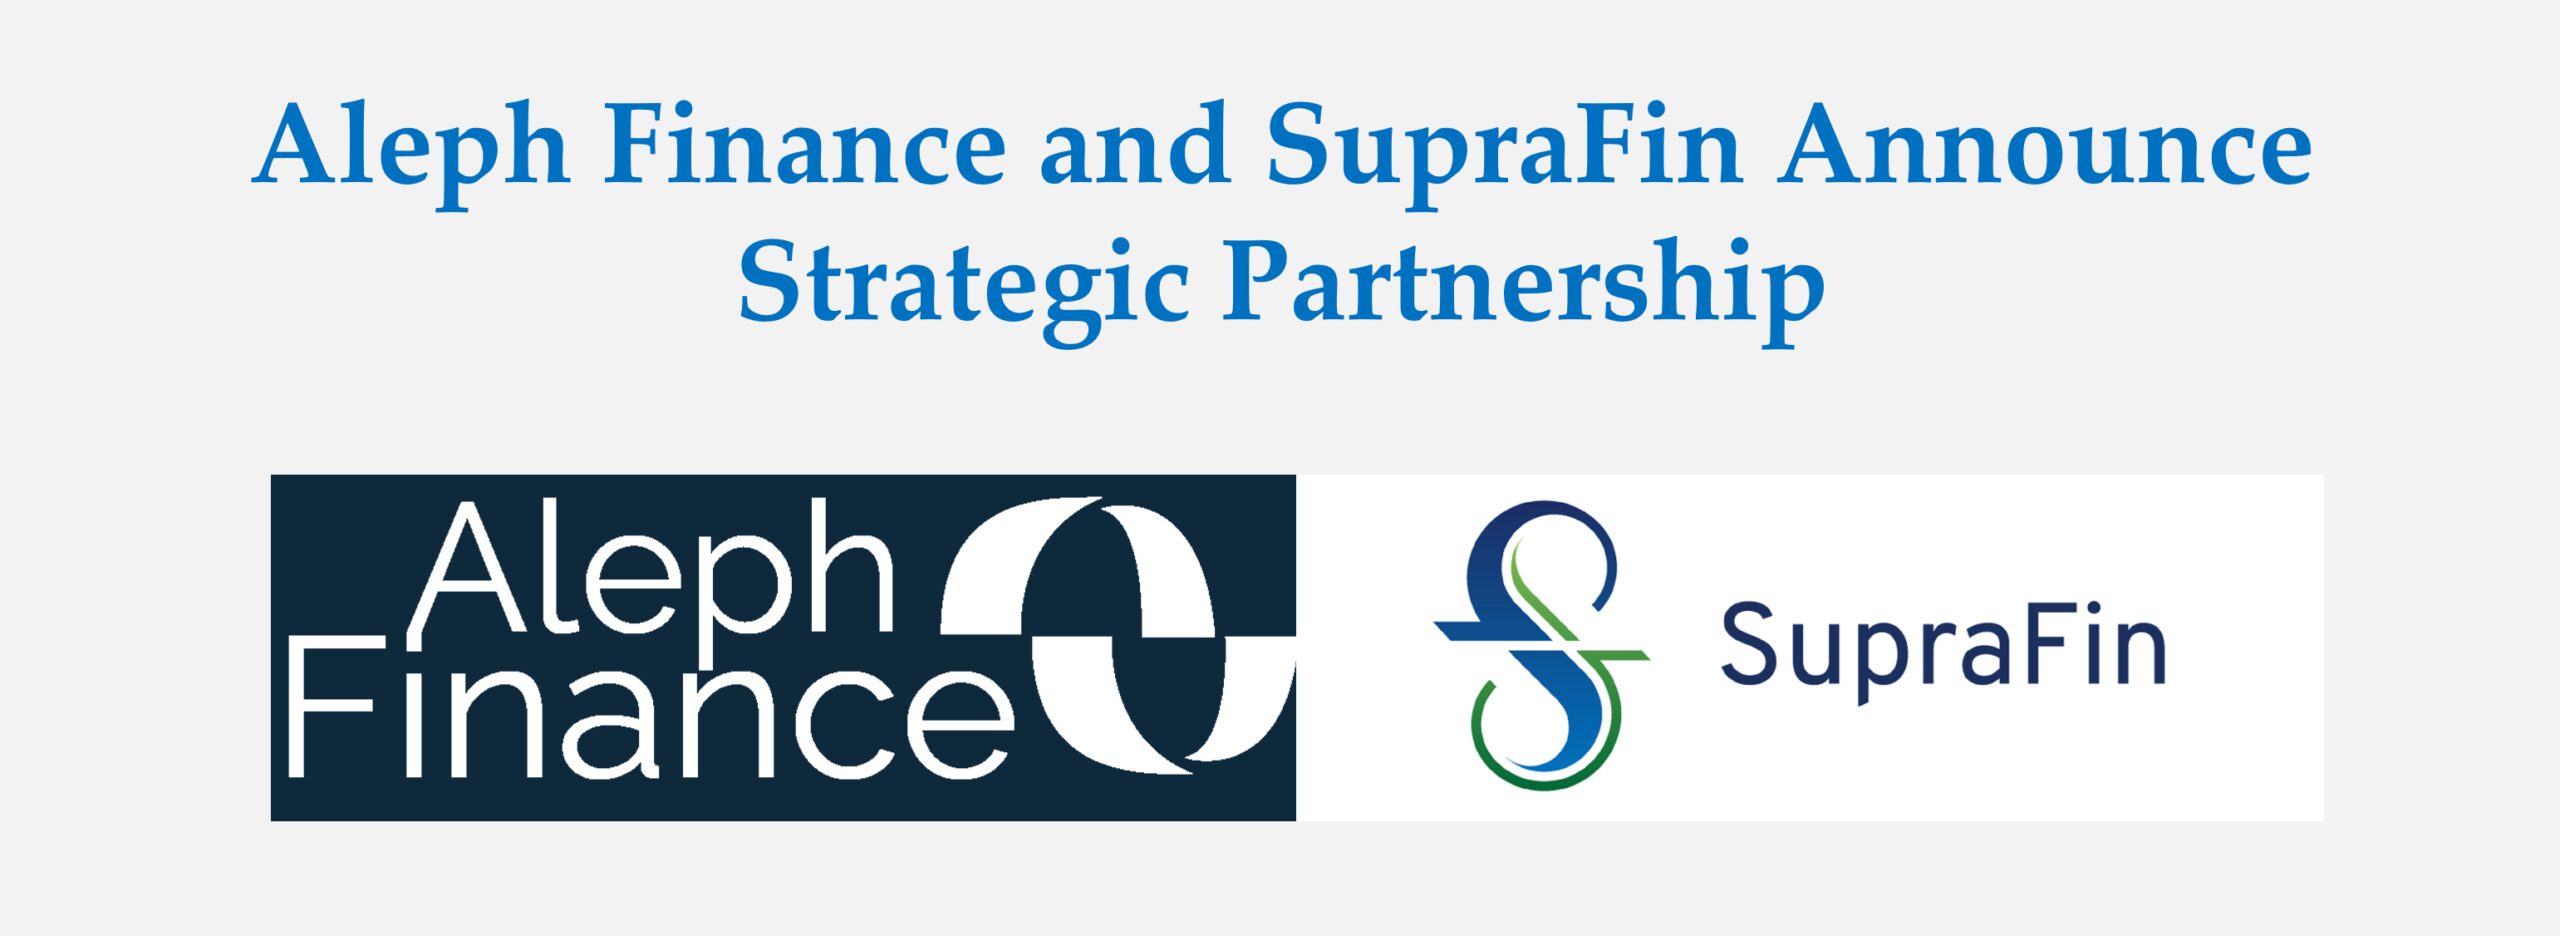 Aleph Finance and SupraFin Announce Strategic Partnership